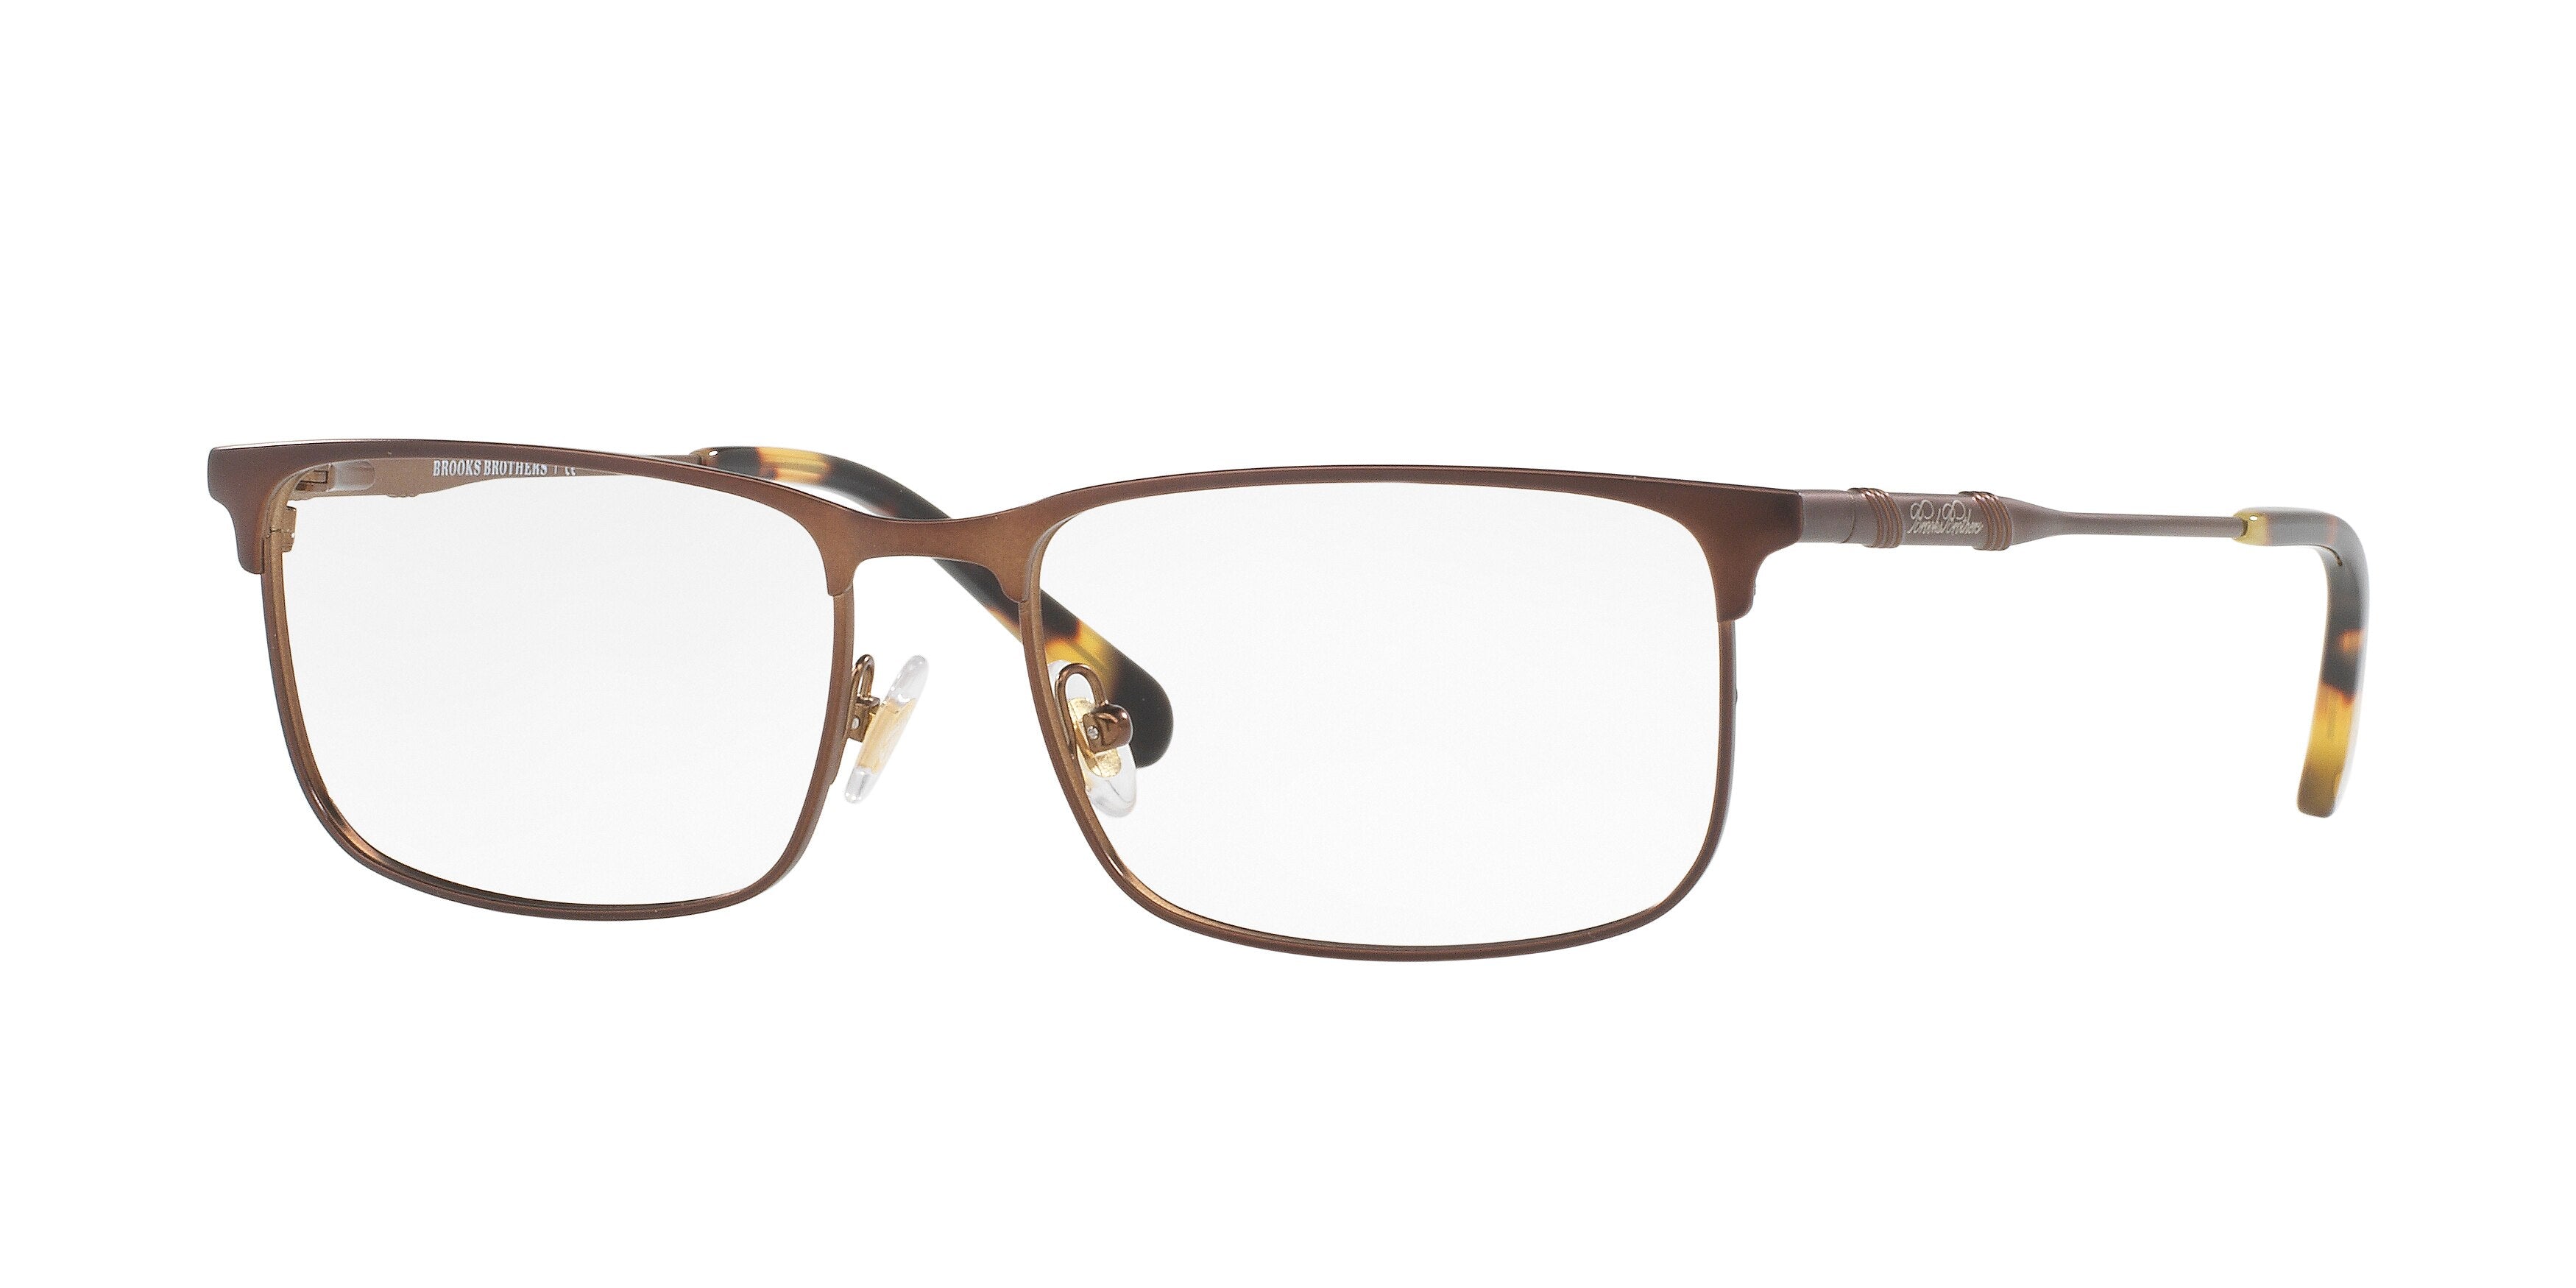 Brooks Brothers BB1046 Rectangle Eyeglasses